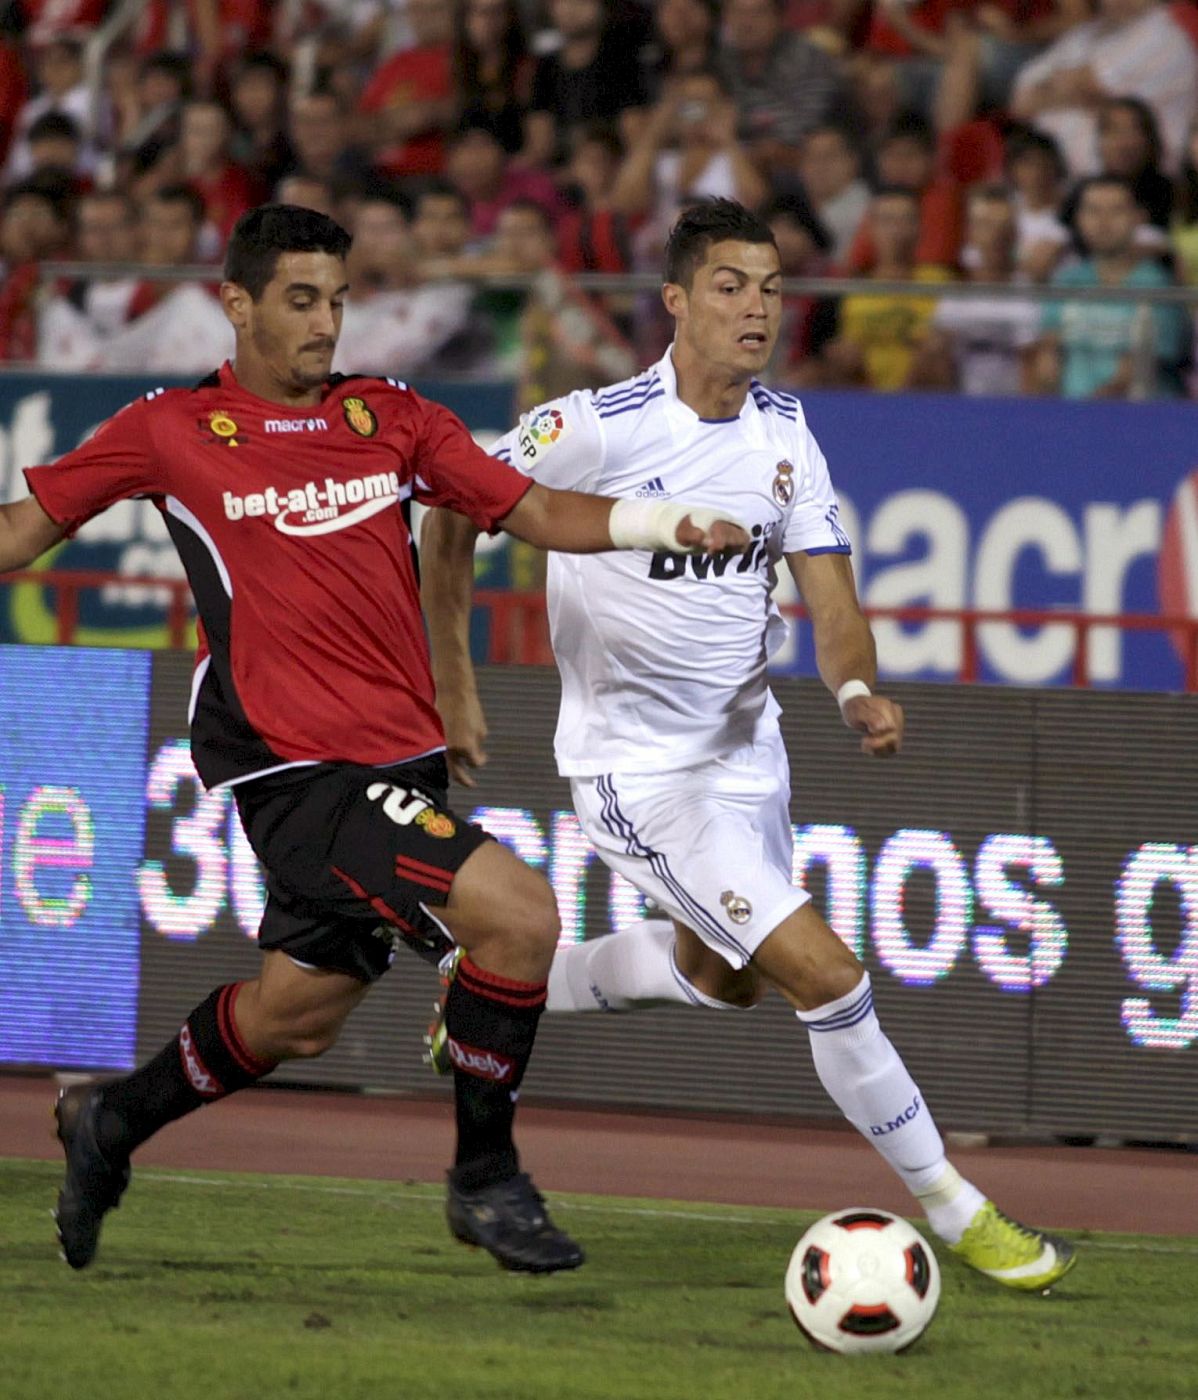 El defensa del RCD Mallorca, Pablo Cendrós, intenta robarle la pelota al delantero portugués del Real Madrid, Cristiano Ronaldo